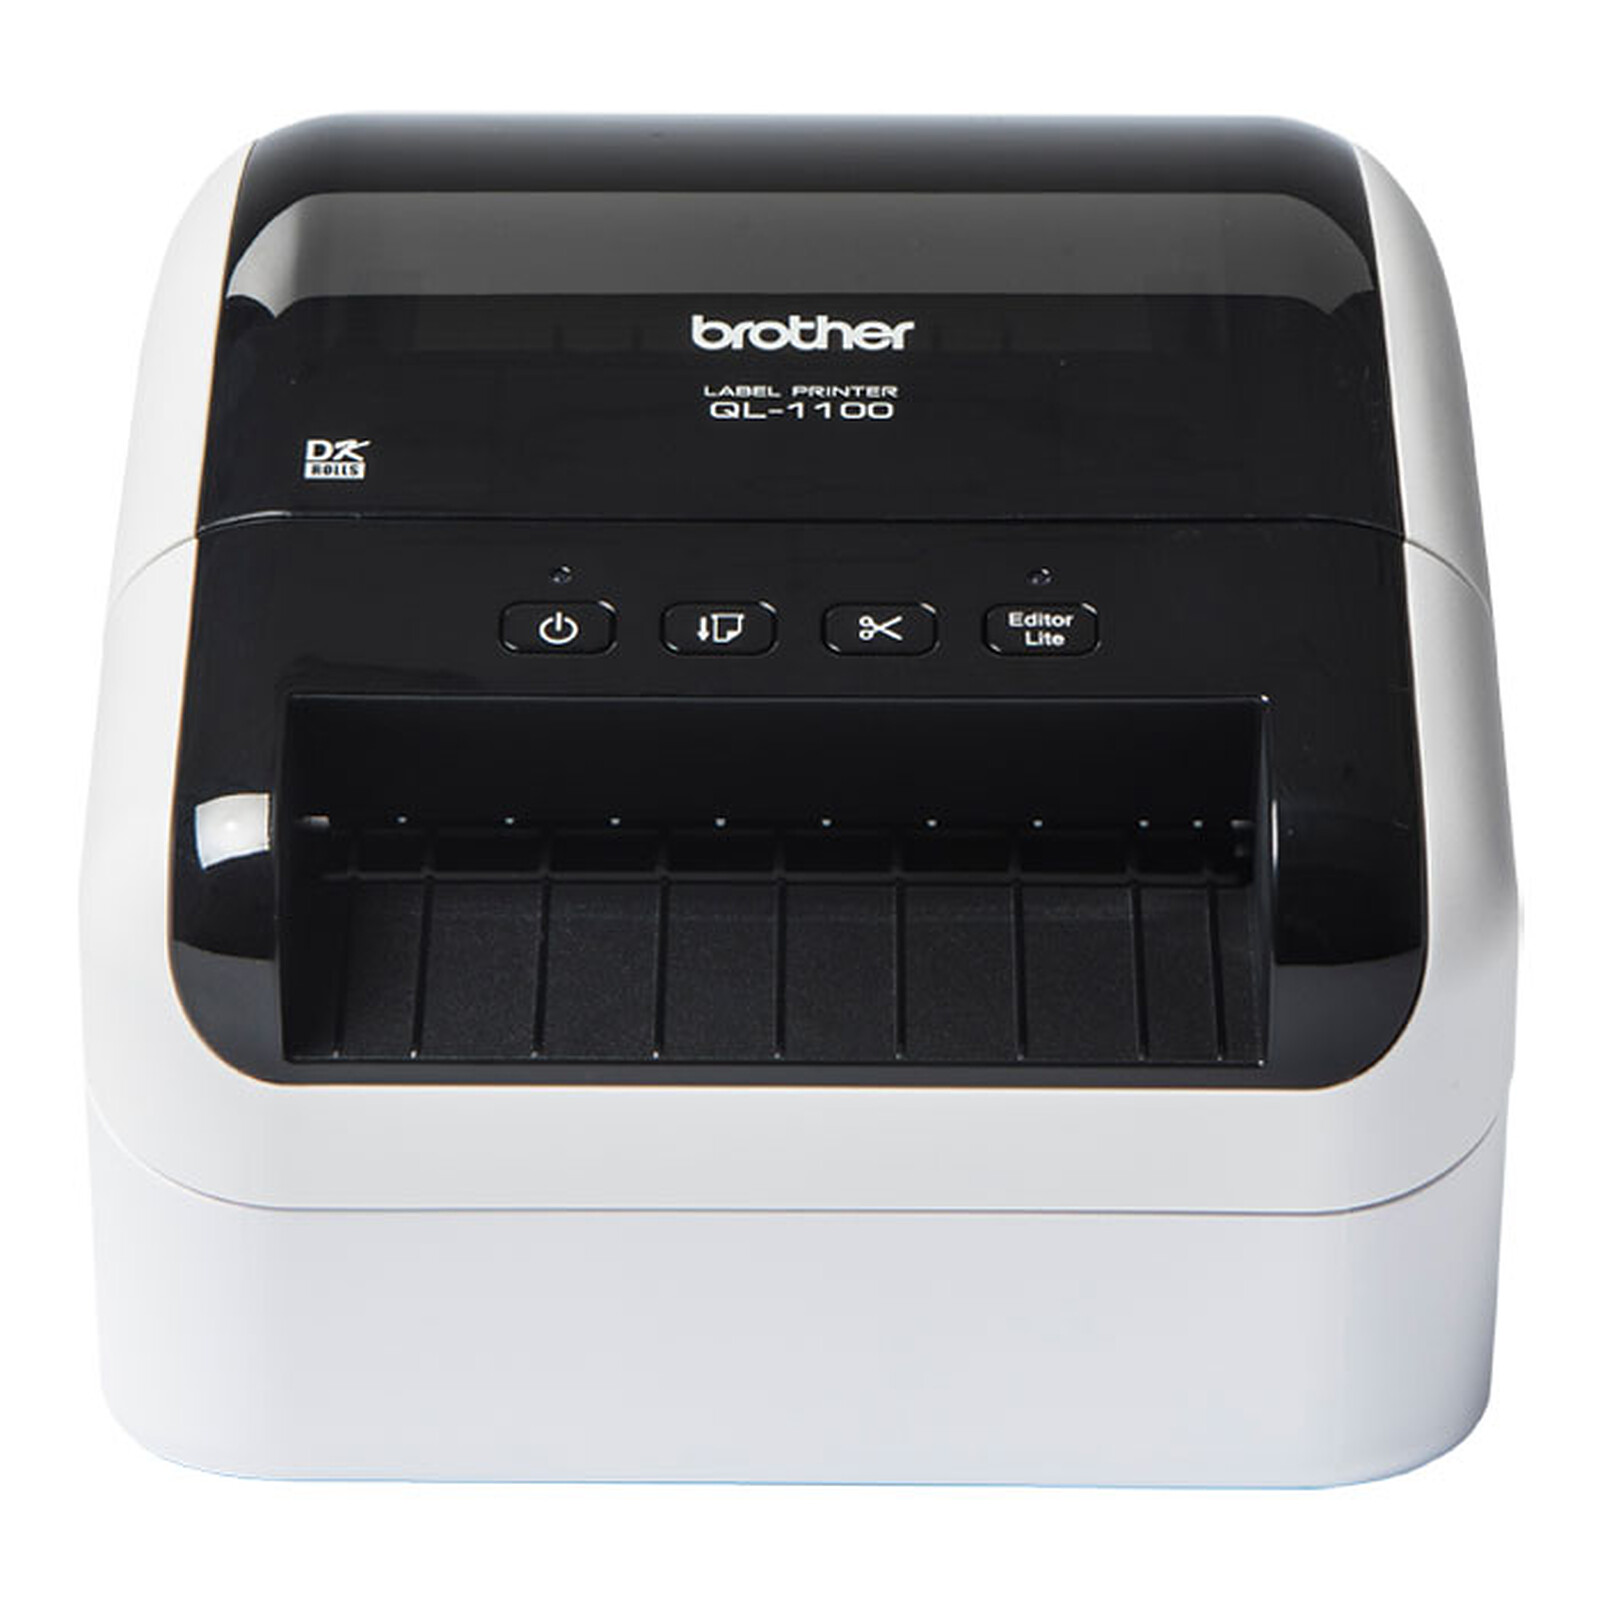 Brother QL-1100 - Thermal printer - LDLC 3-year warranty